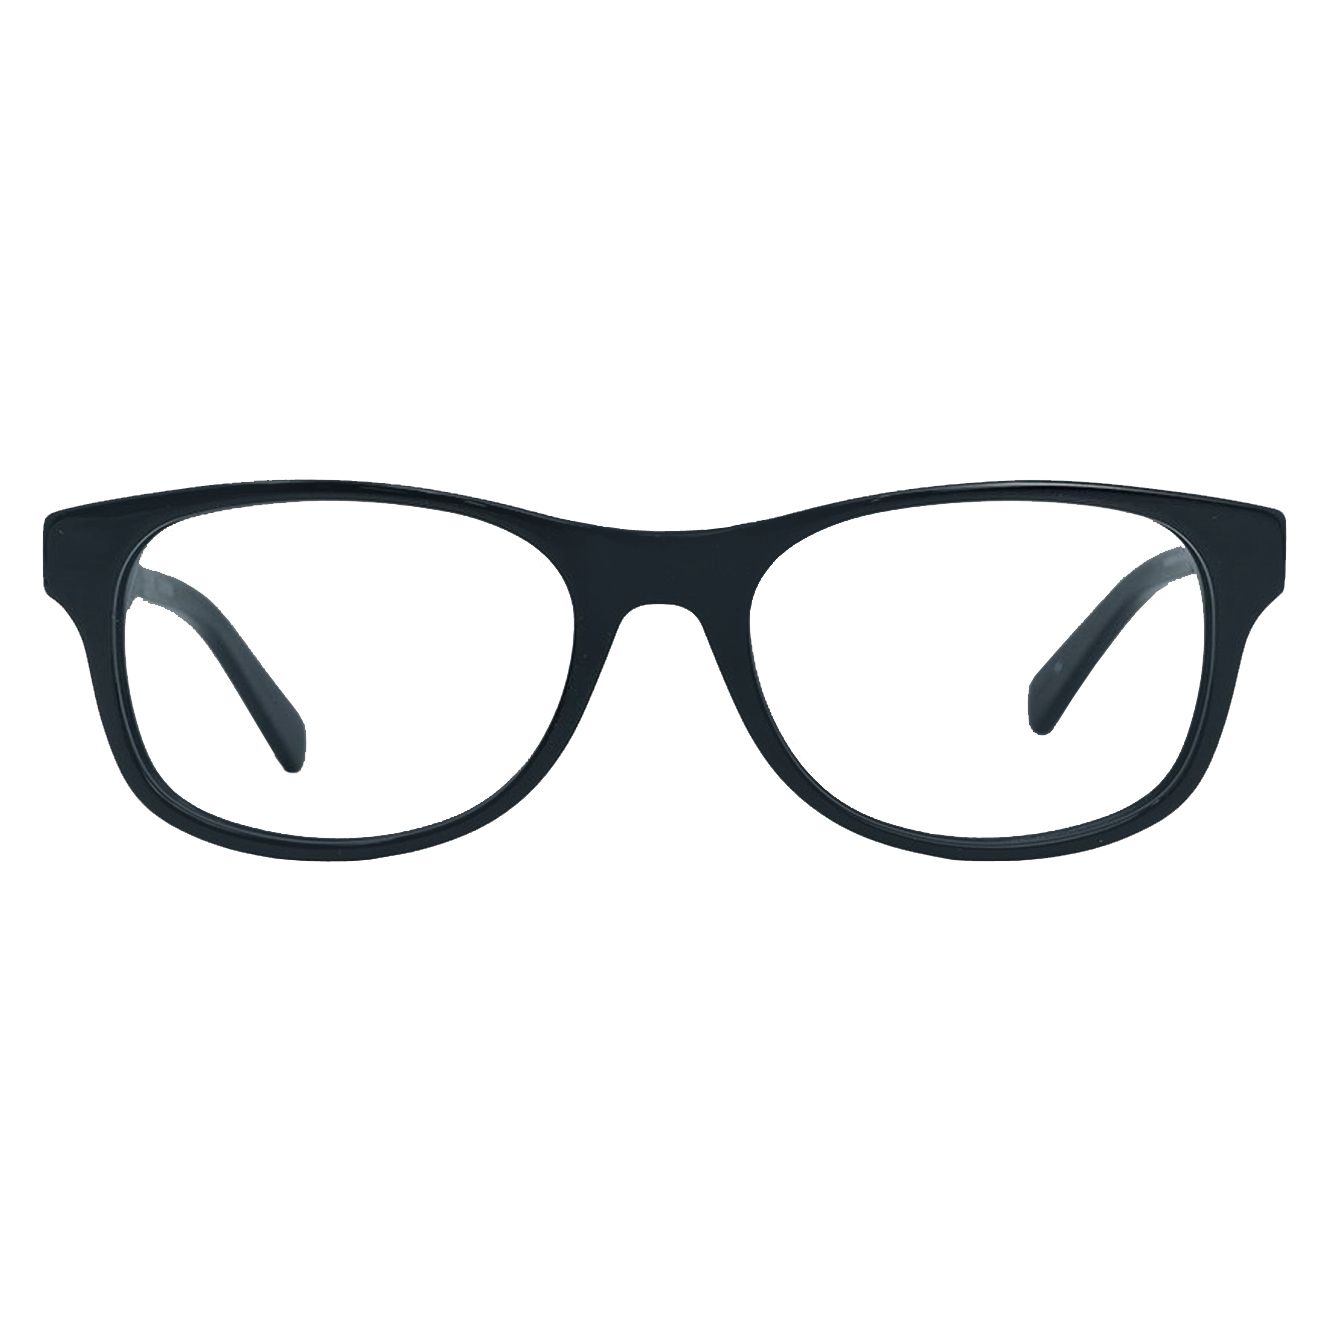 فریم عینک طبی گس مدل GU185800151 -  - 4